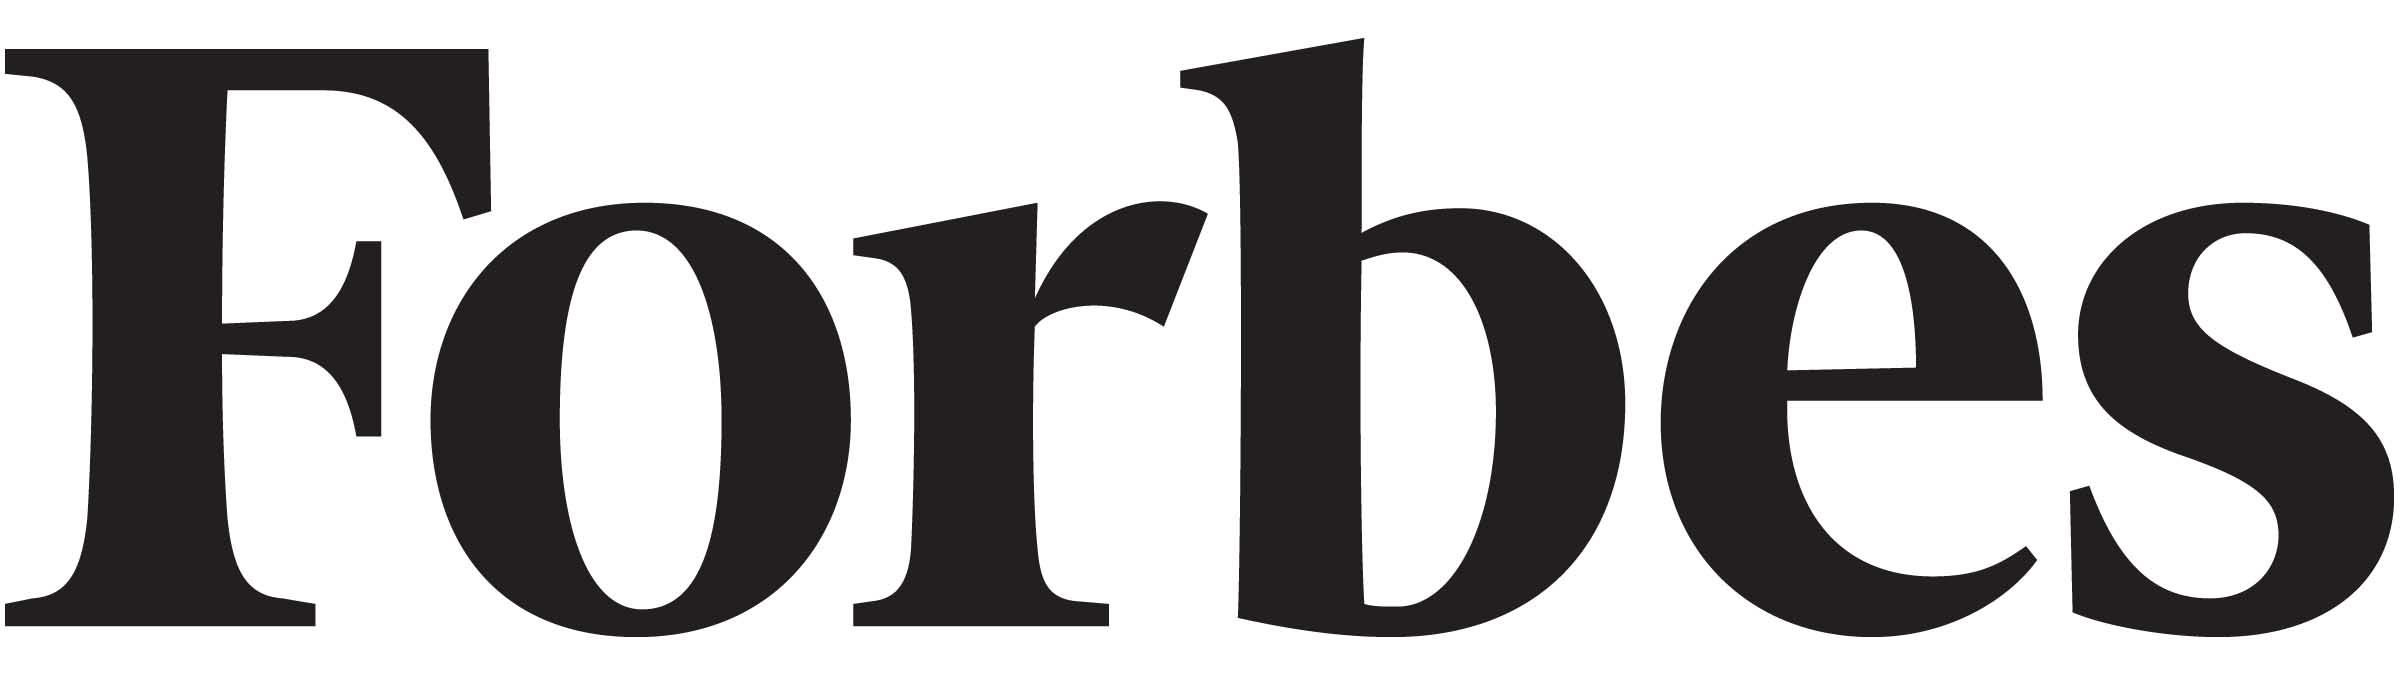 Logotipo de Forbes